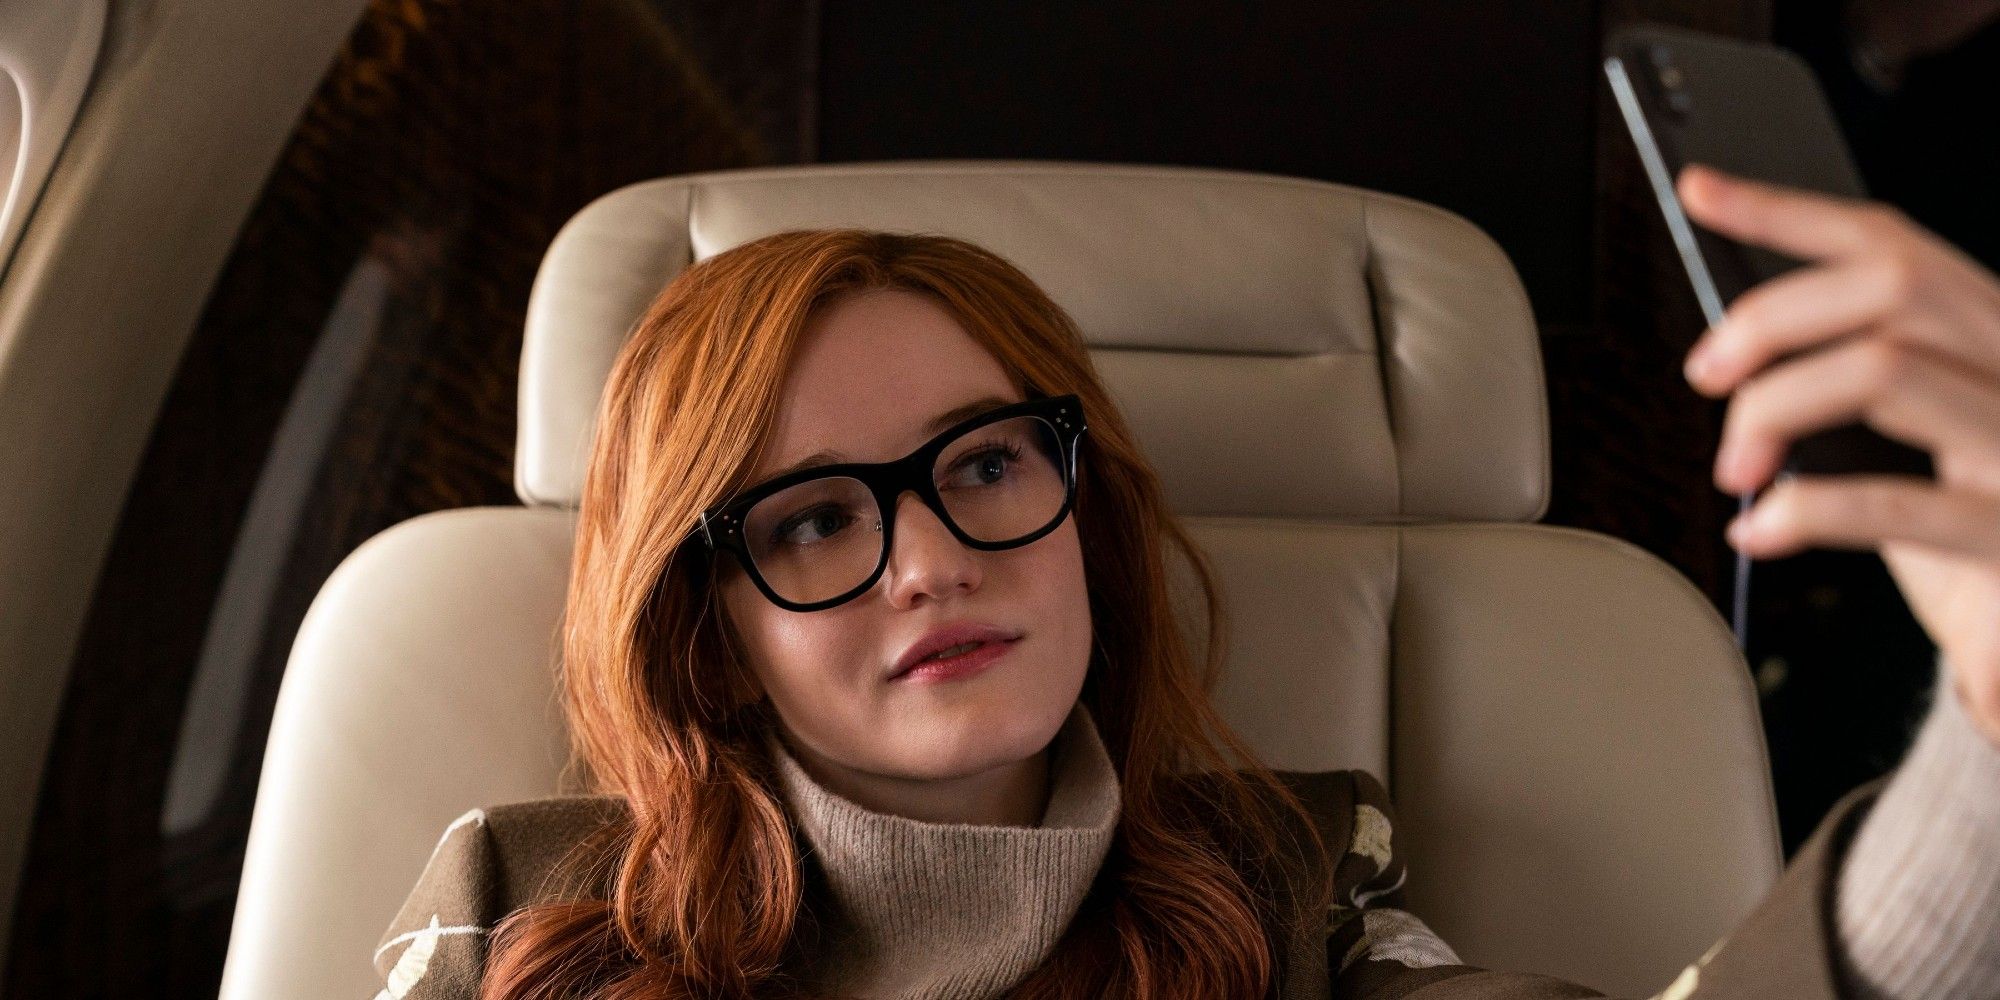 Julia Garner as Anna Delvey takes a selfie while on a plane